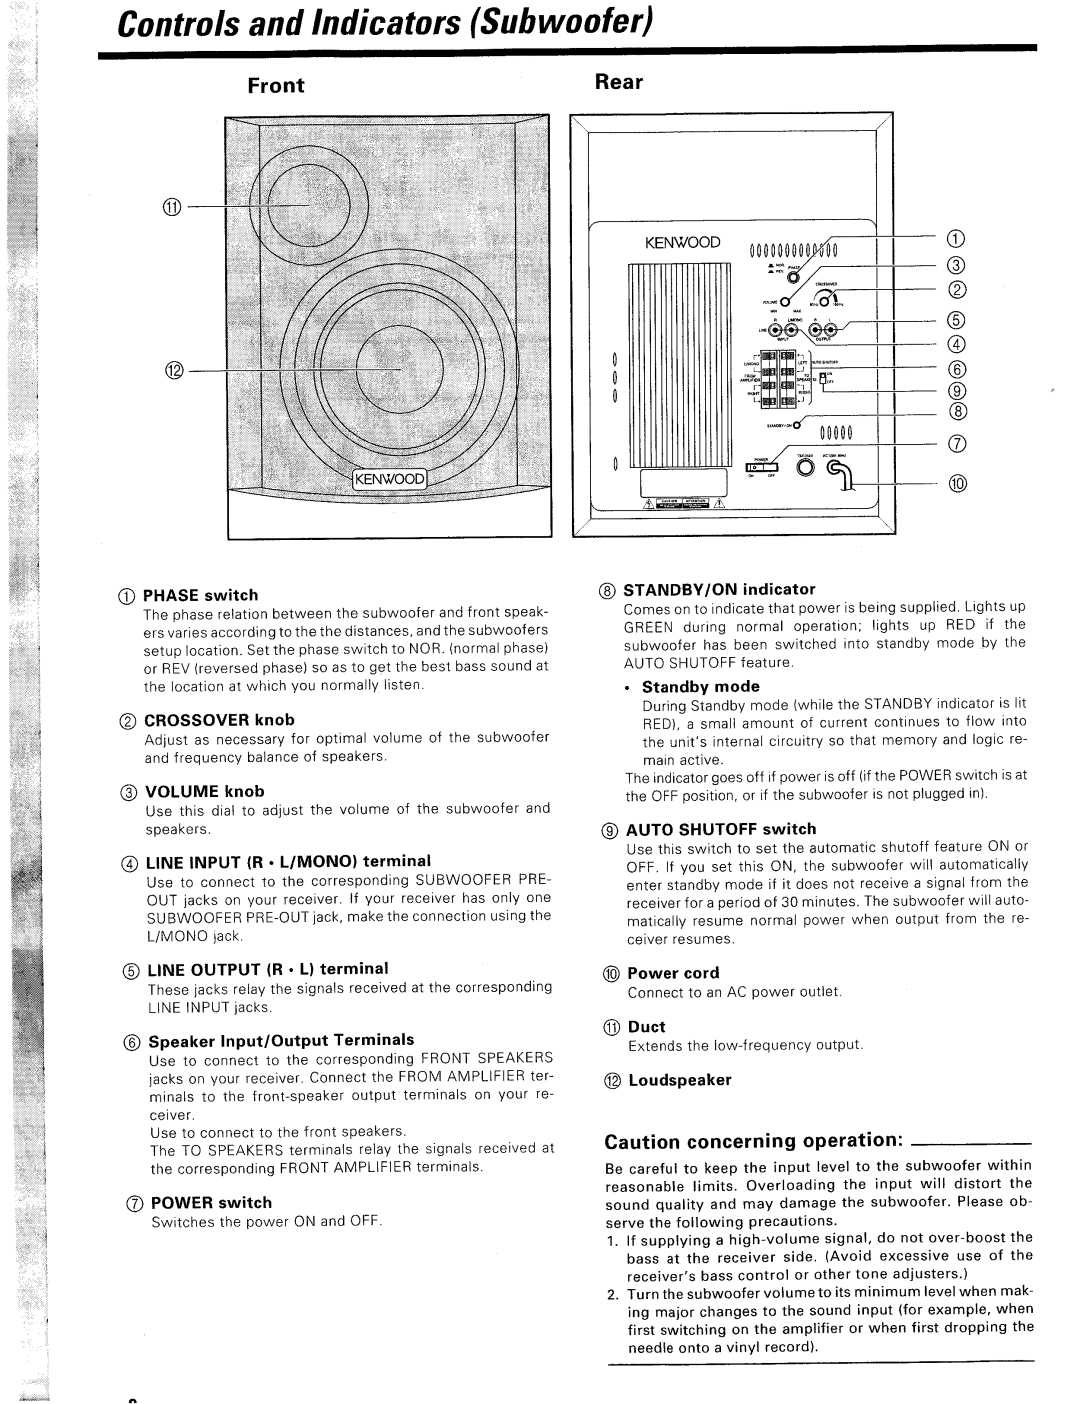 Kenwood KS-303HT manual 